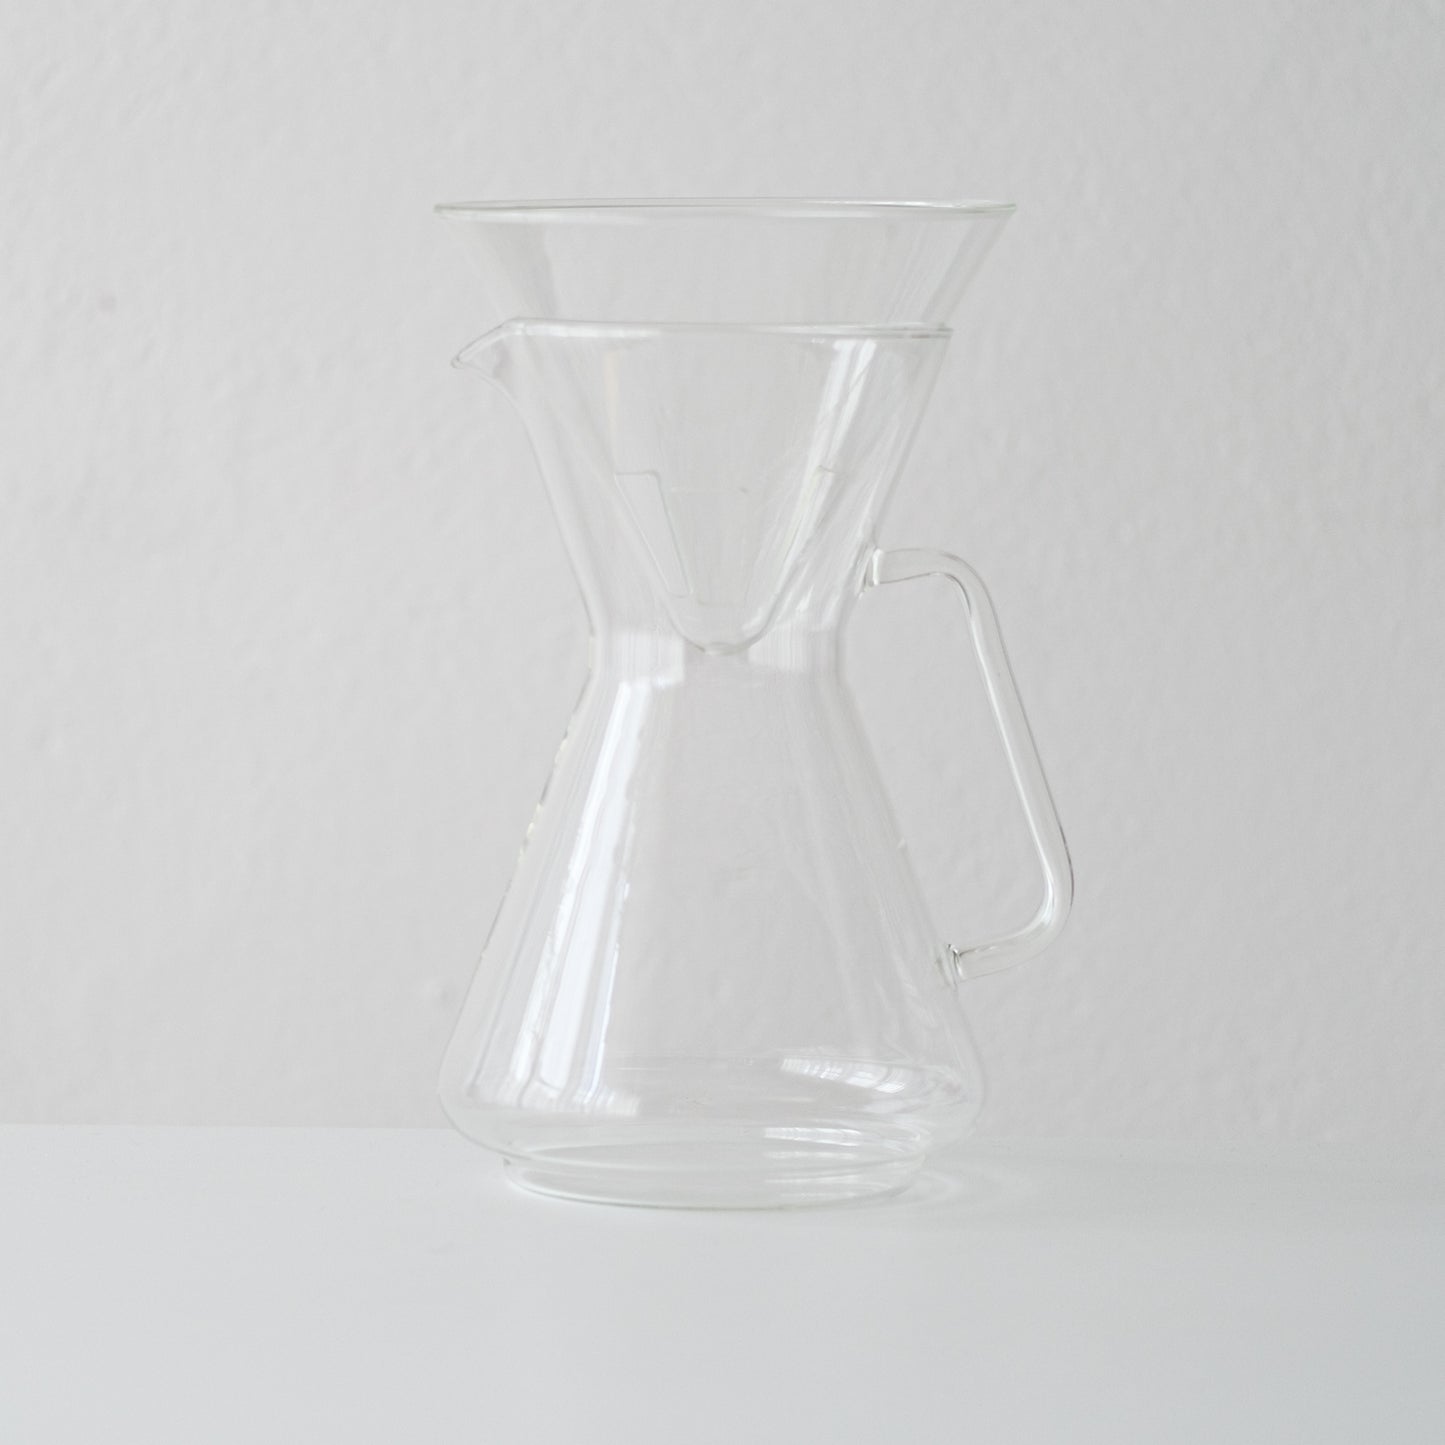 Coffee Maker & Strainer - Glass